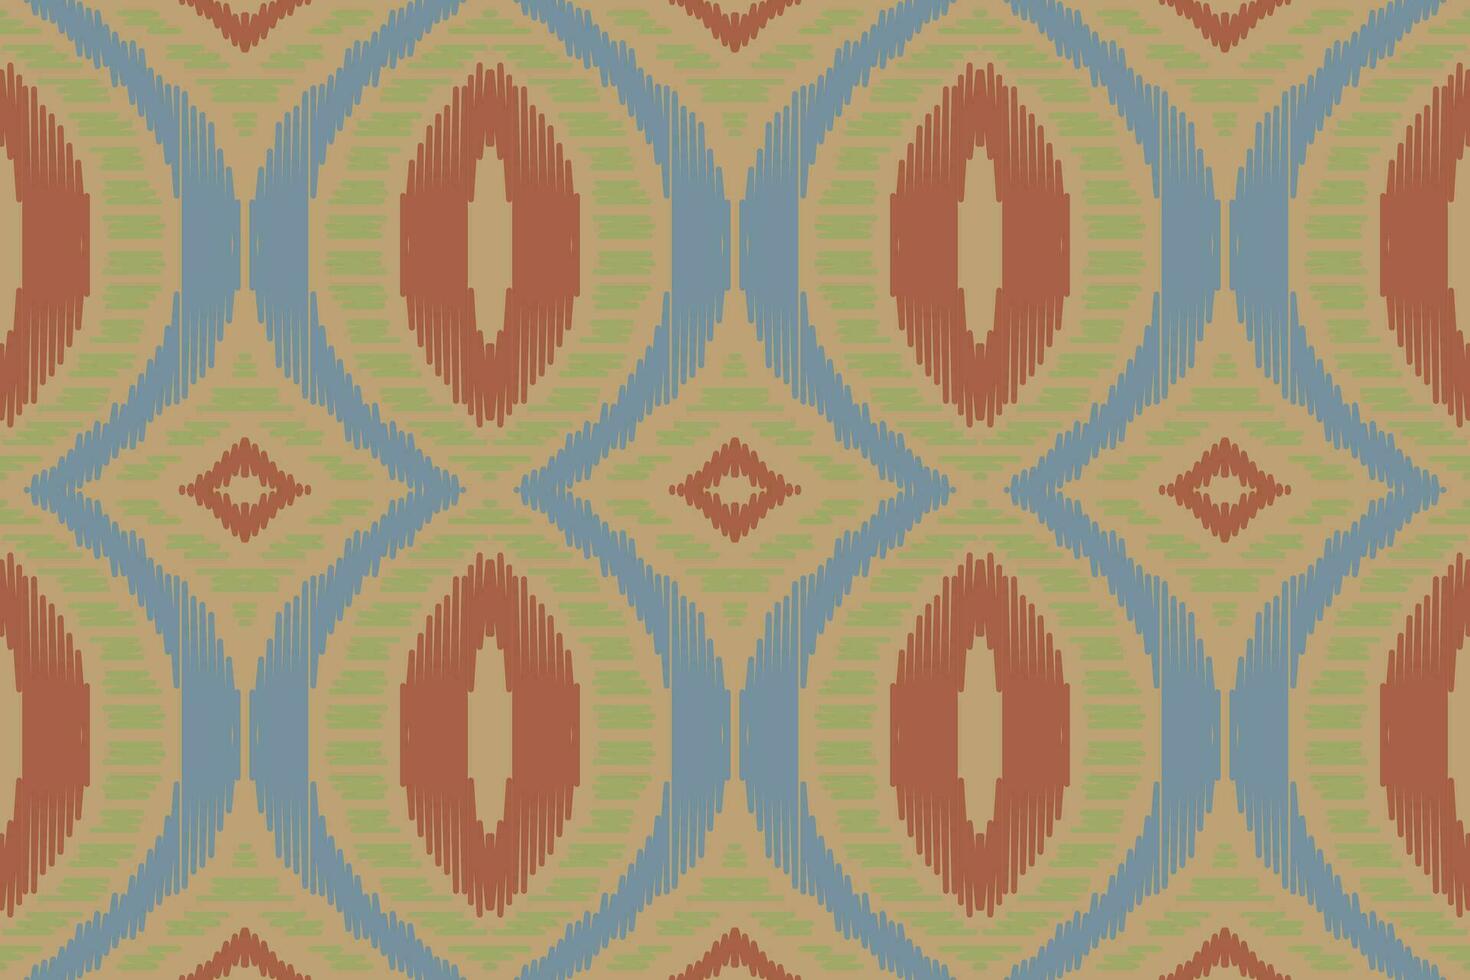 motivo ikat floral cachemir bordado antecedentes. ikat flor geométrico étnico oriental modelo tradicional.azteca estilo resumen vector diseño para textura,tela,ropa,envoltura,pareo.